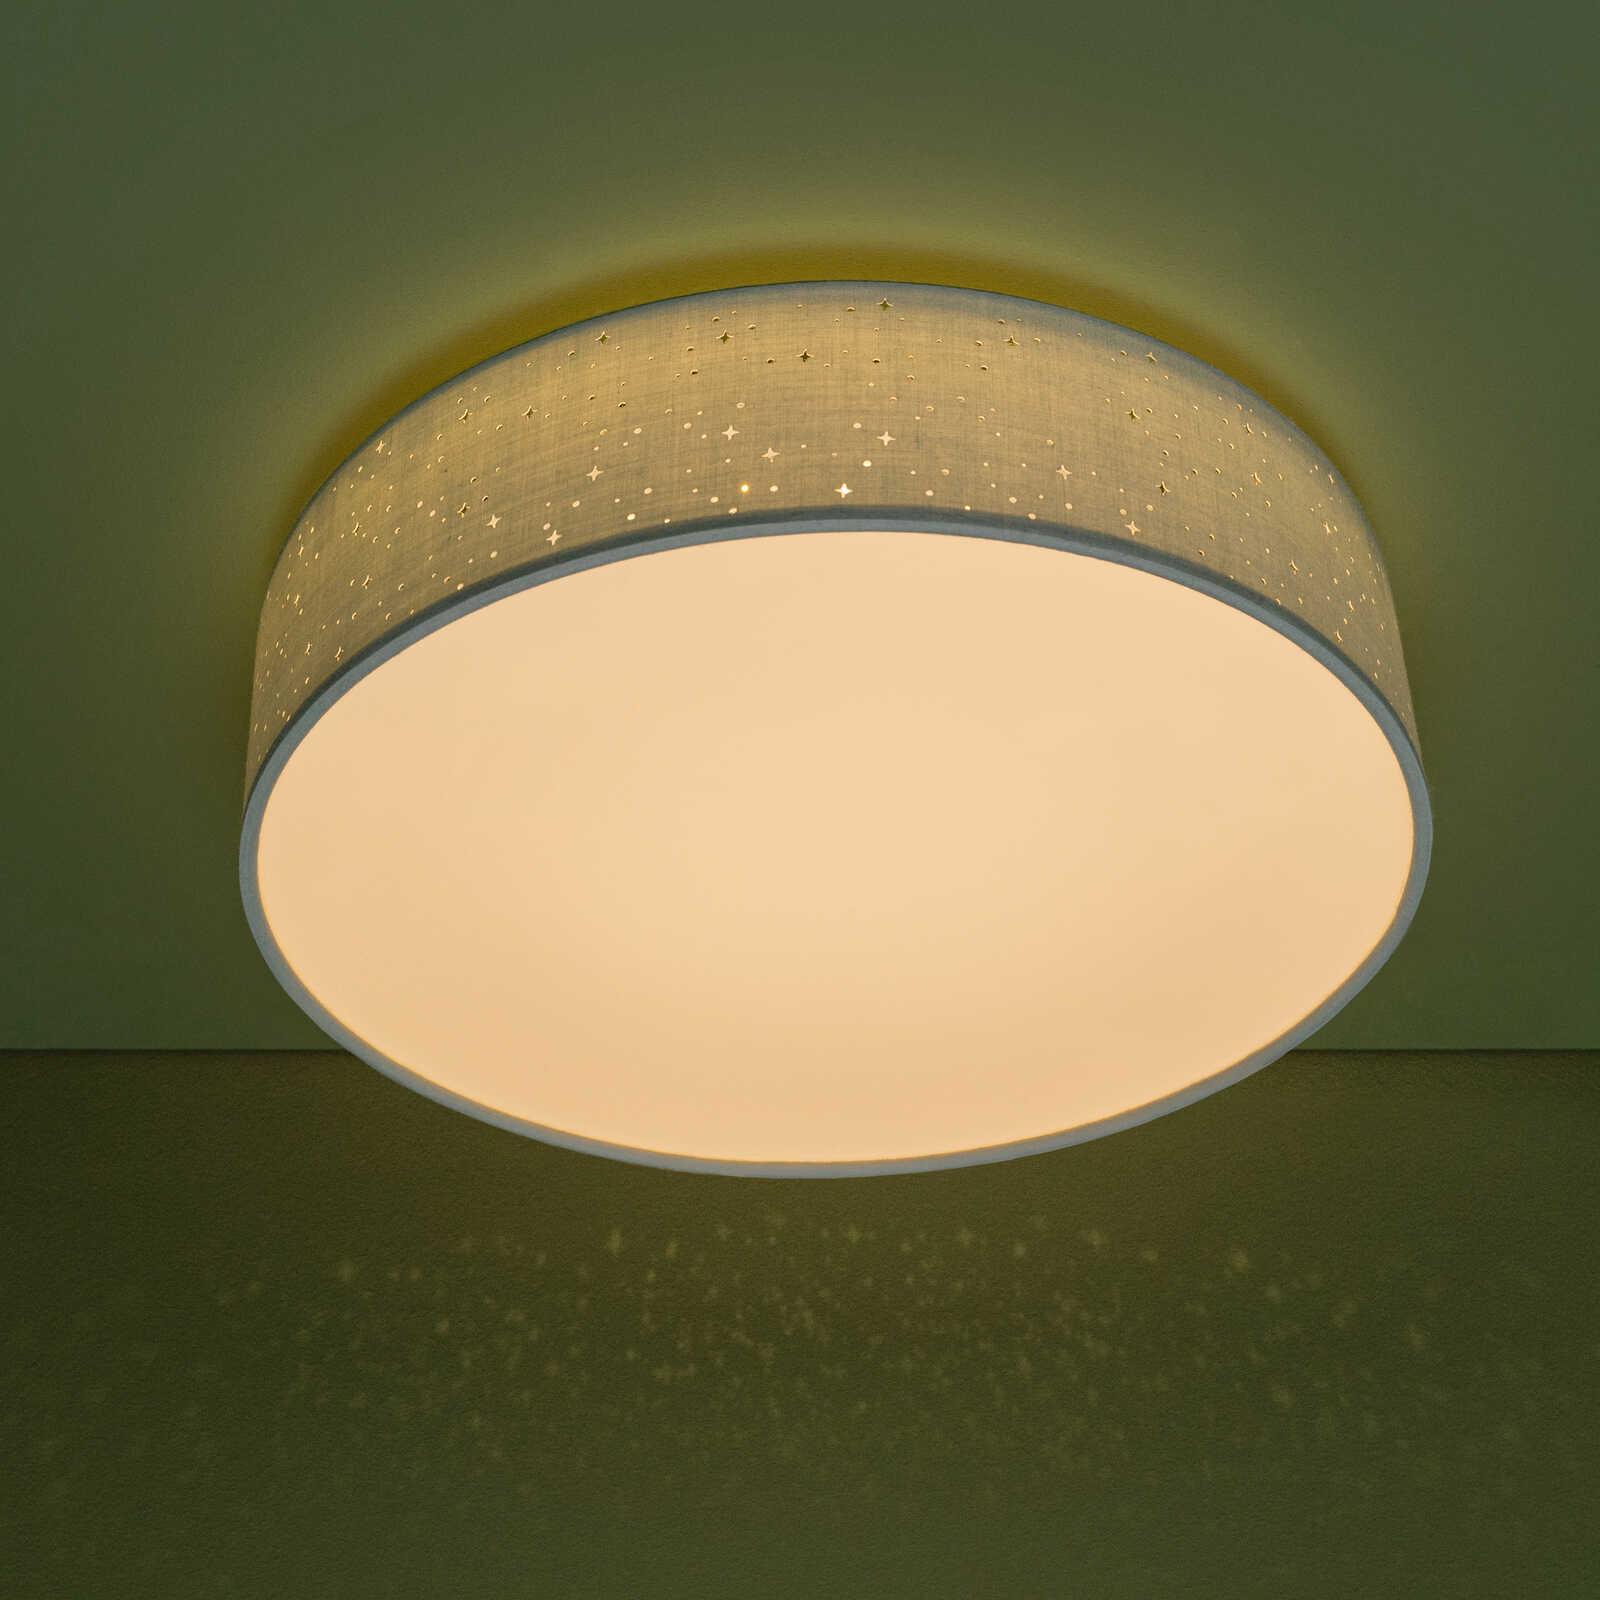             Textiele plafondlamp - Ava 2 - Groen
        